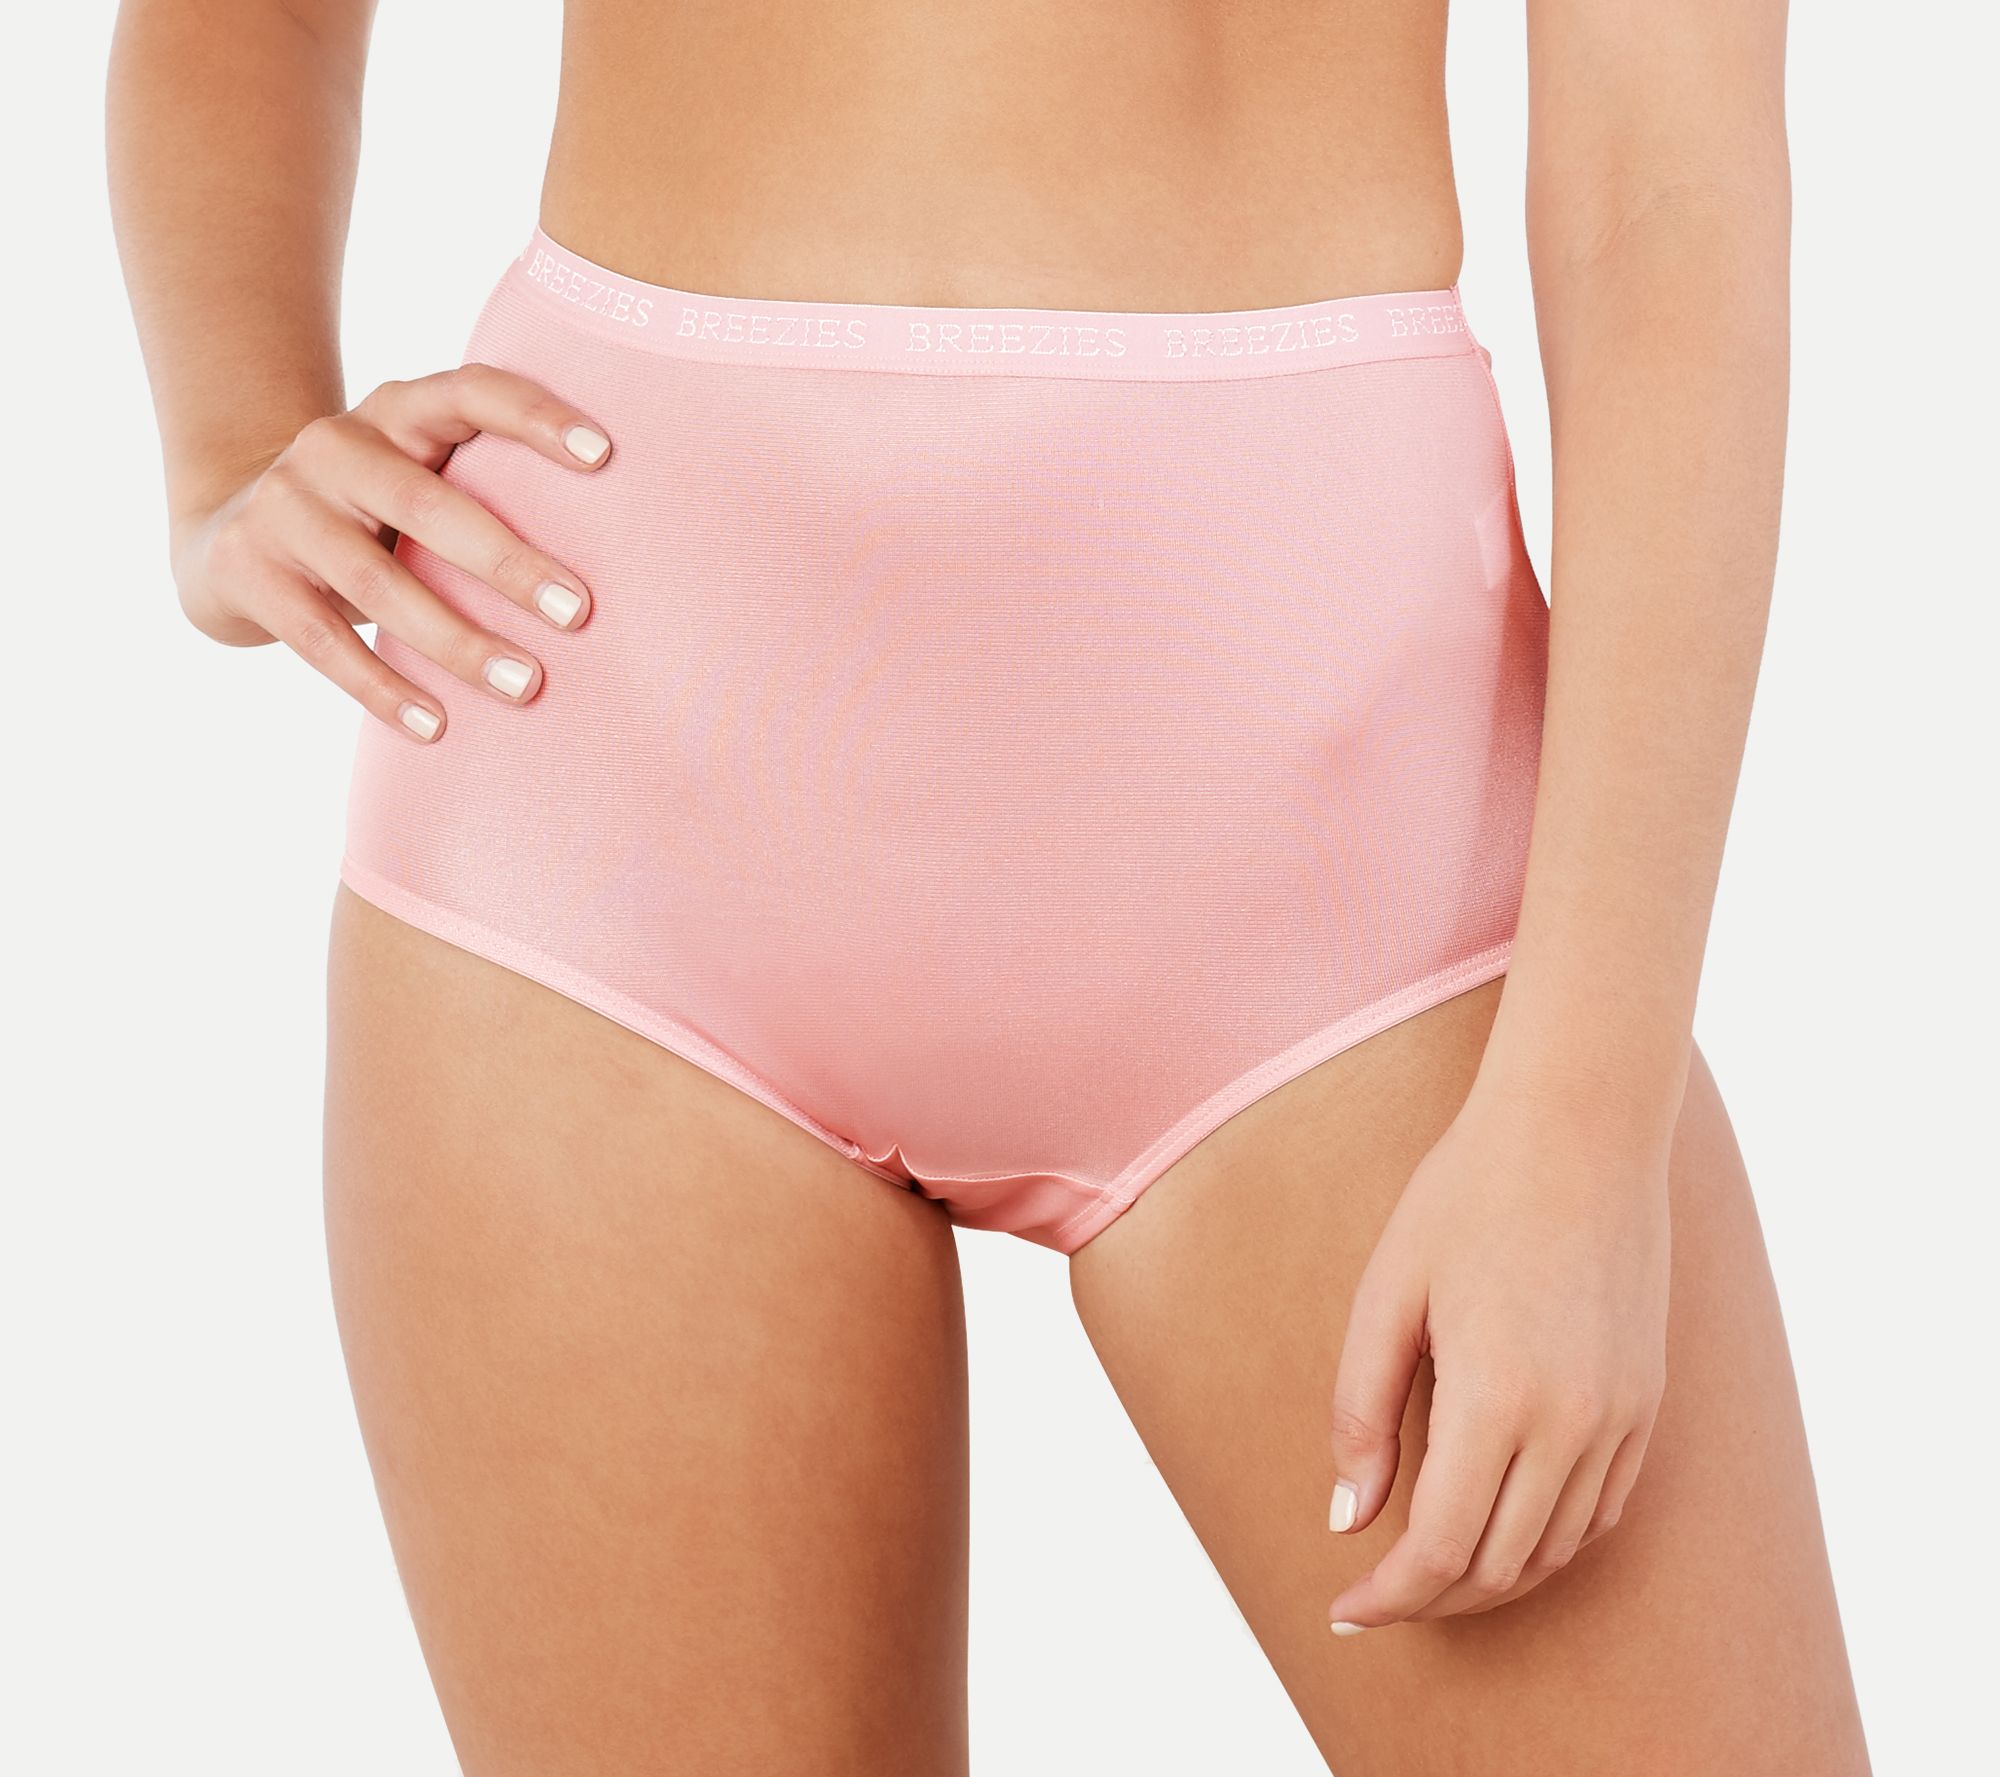 Pants Underpants Men's Nylon No Accessories 1 Piece 100% Brand New Printed